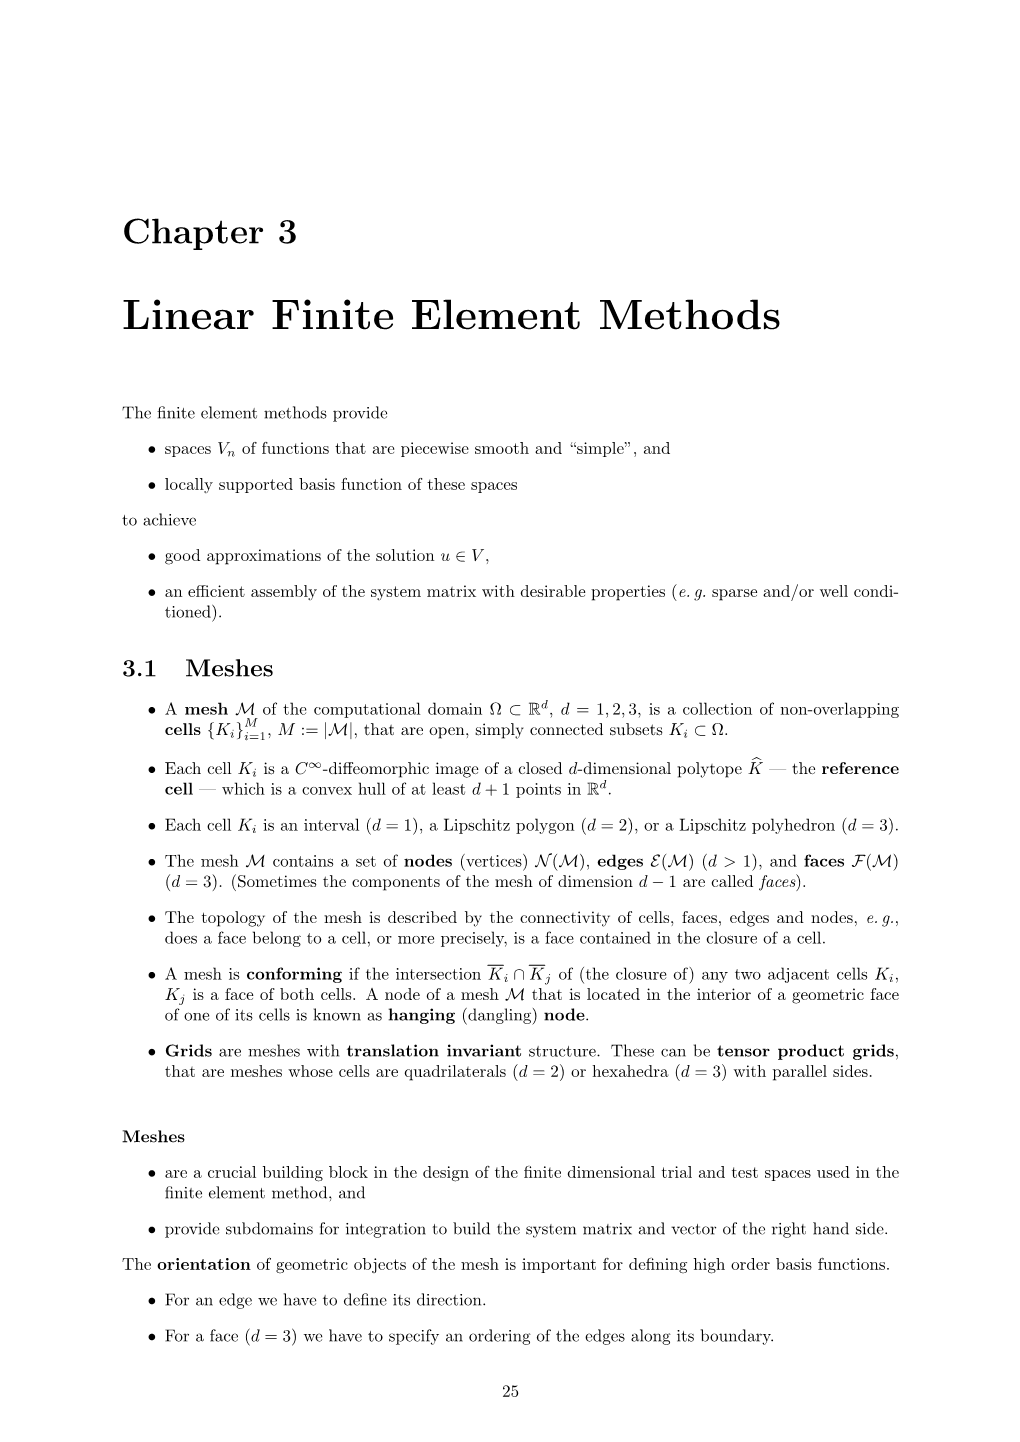 Linear Finite Element Methods